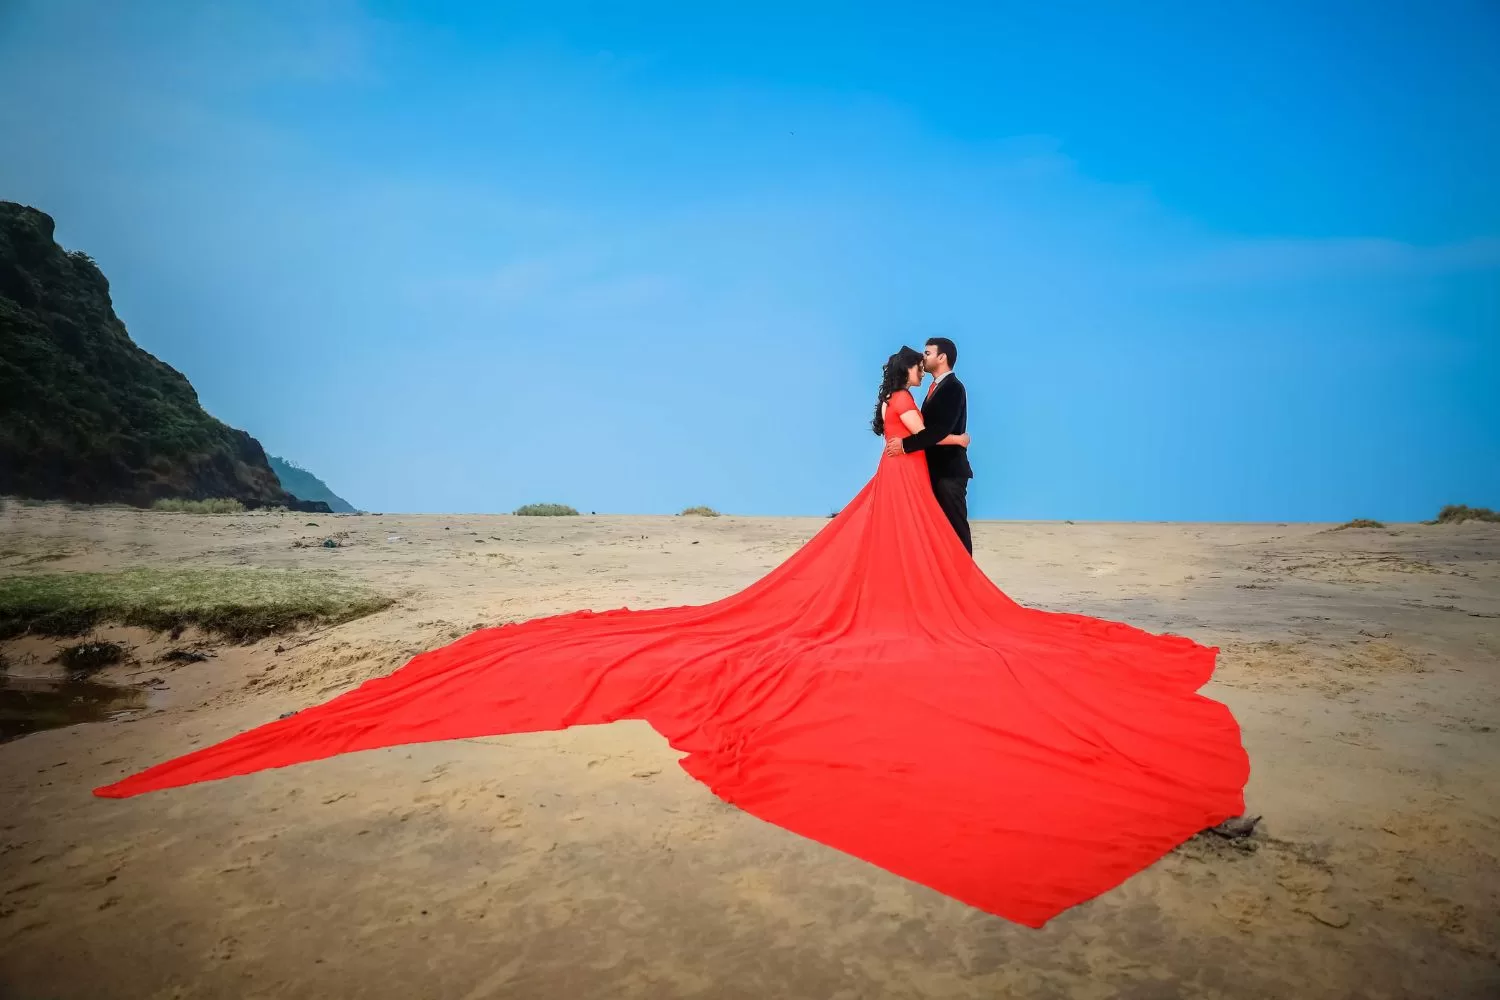 Western Pre-Wedding Shoot Dresses Ideas For Millennial Couples